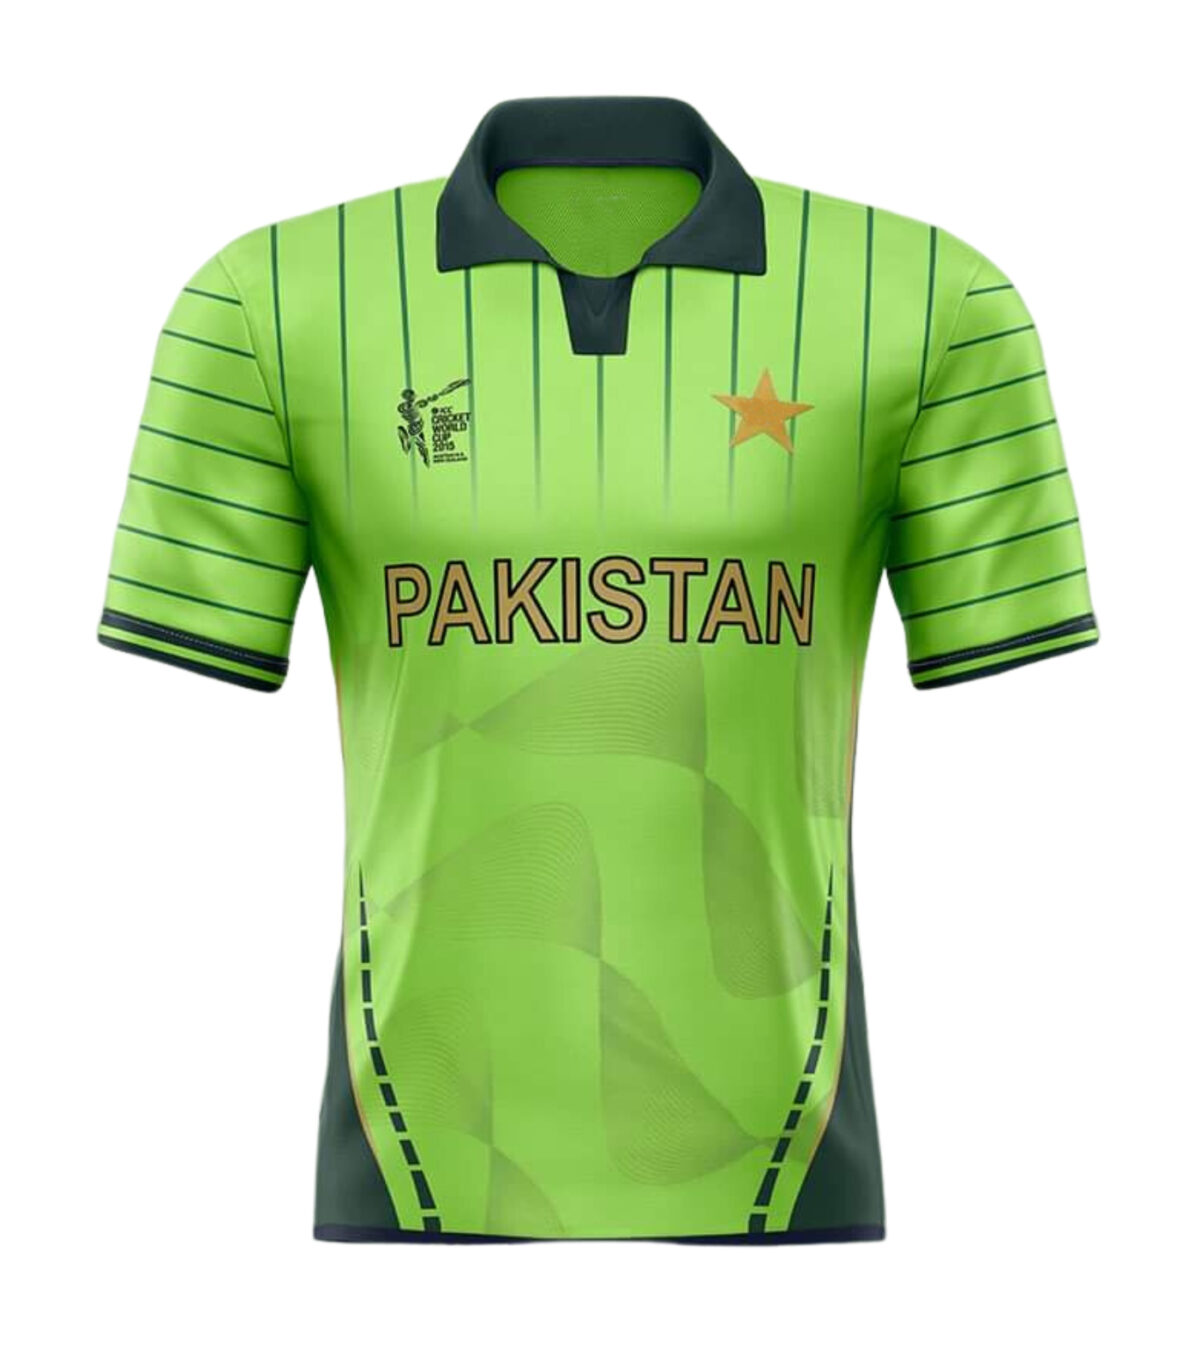 Pakistan 2015 world cup jersey